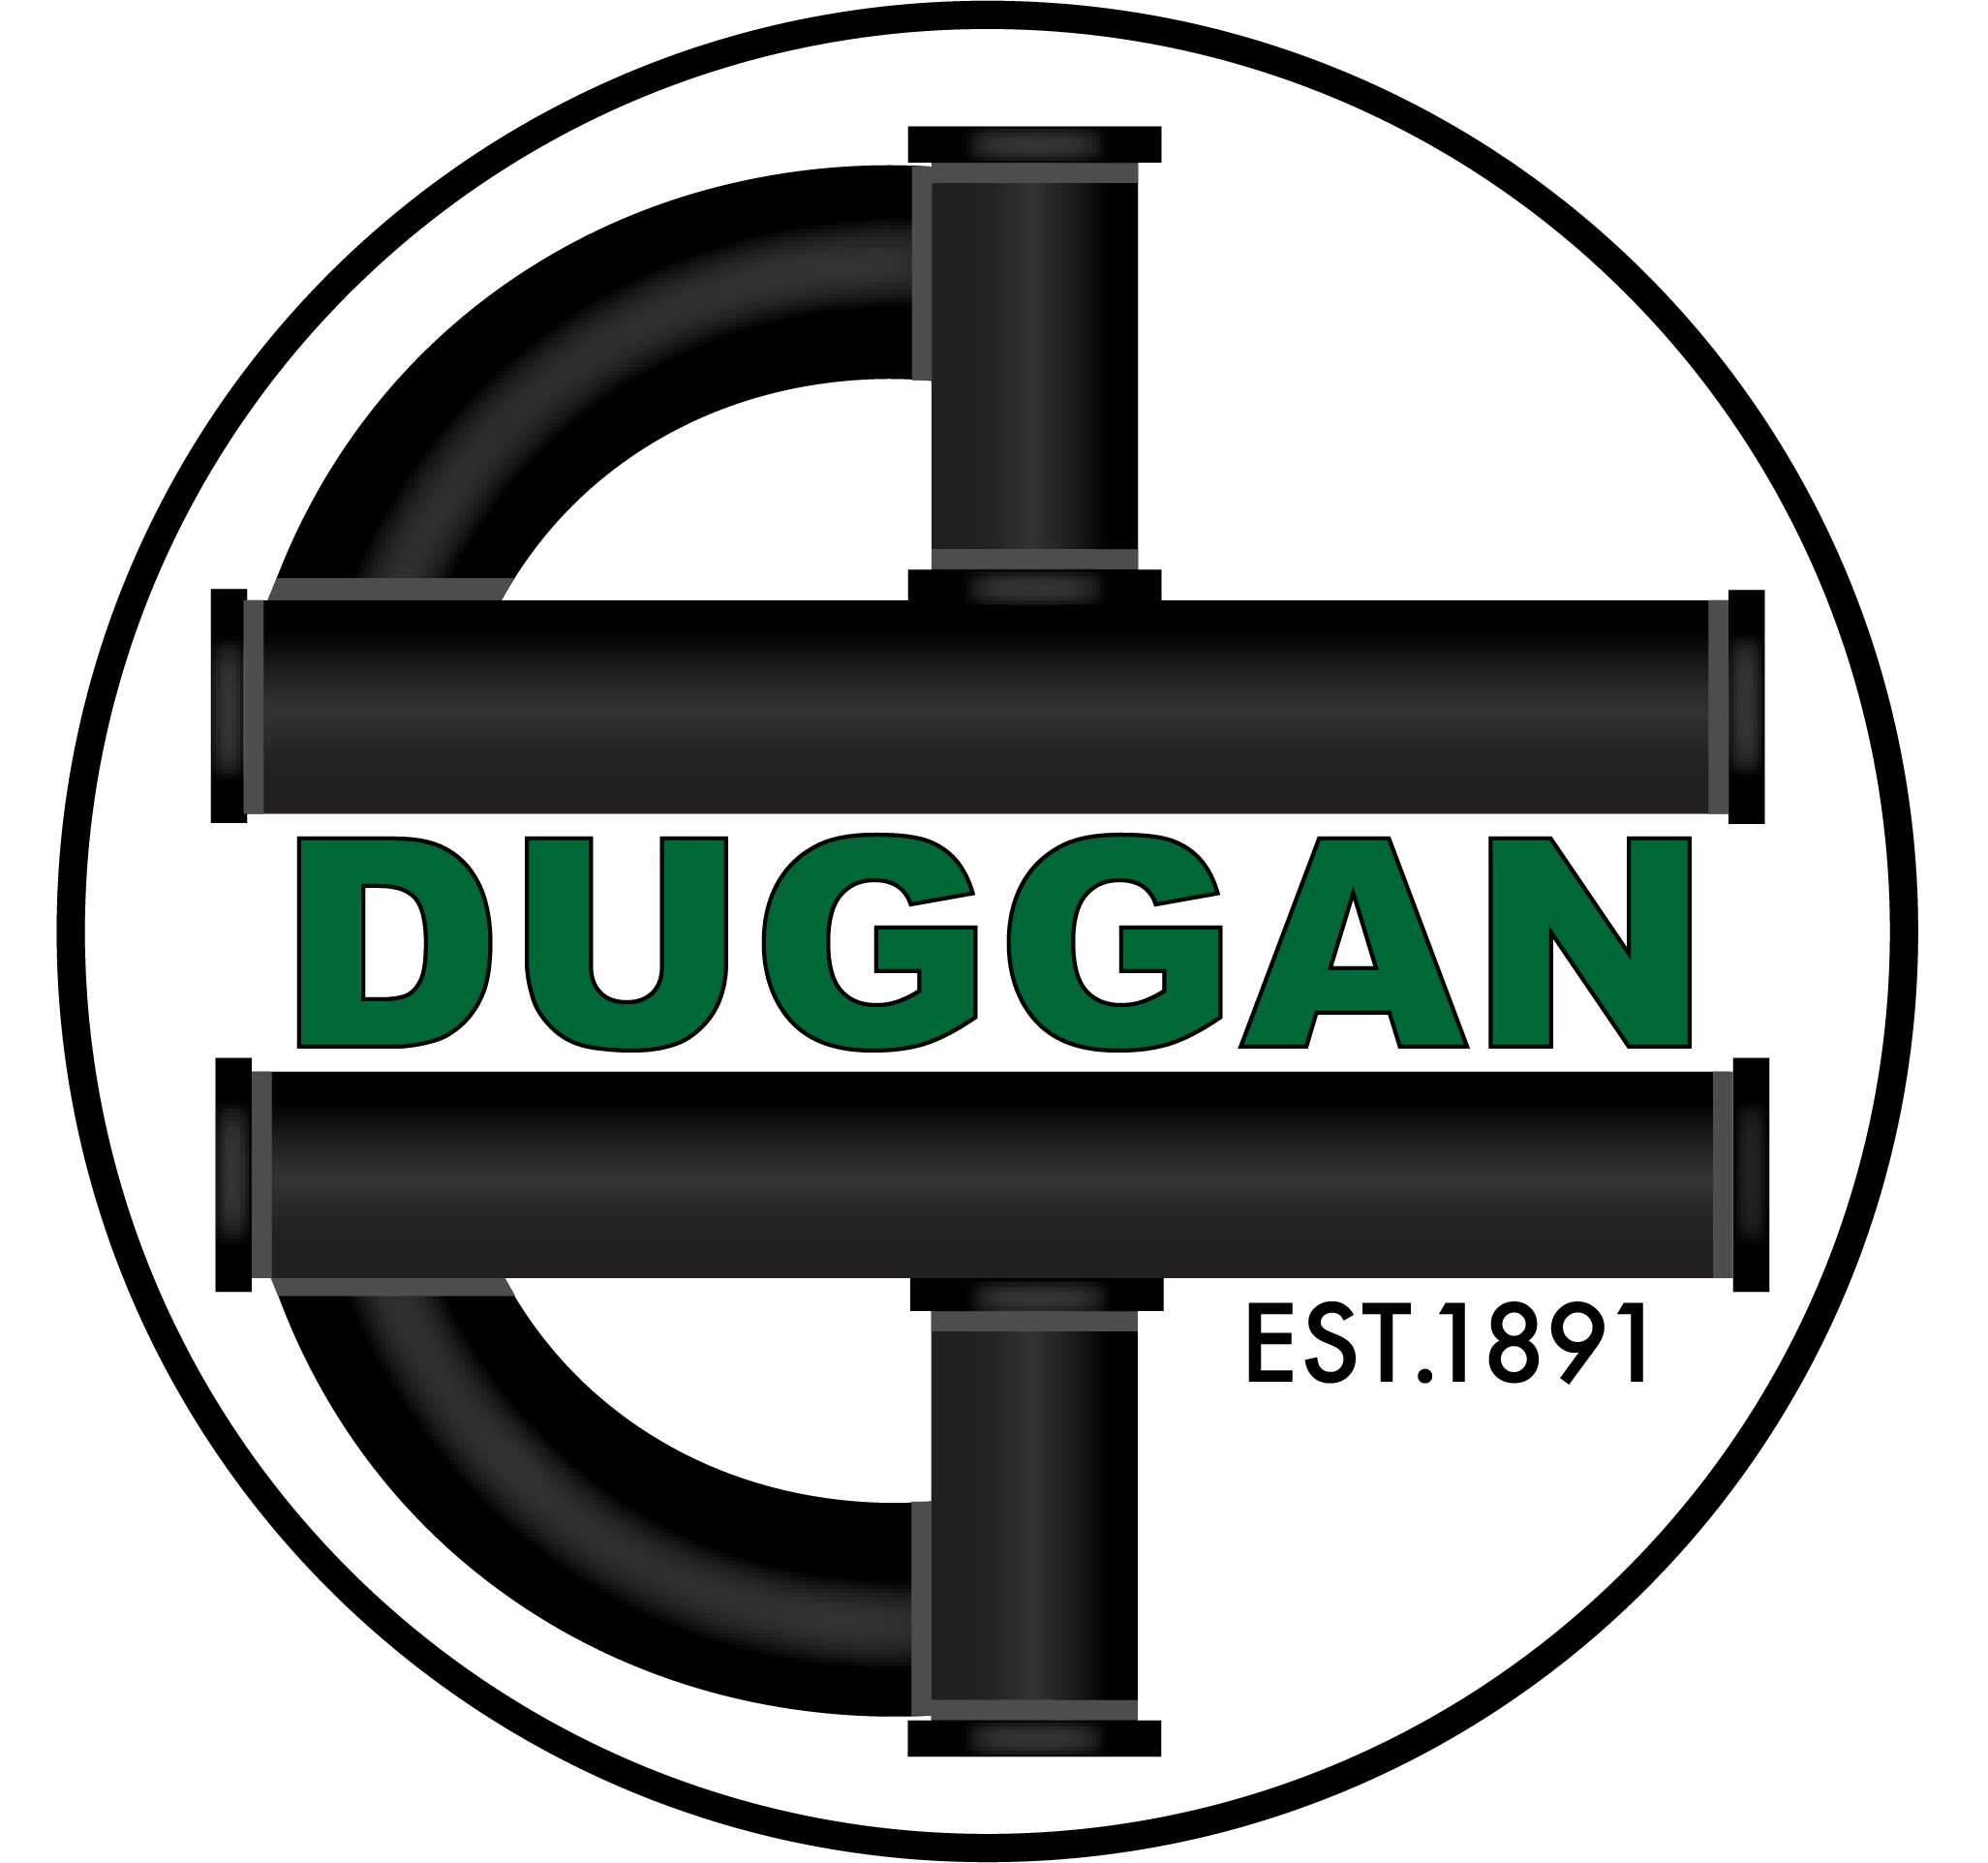 Duggan logo 2020.png